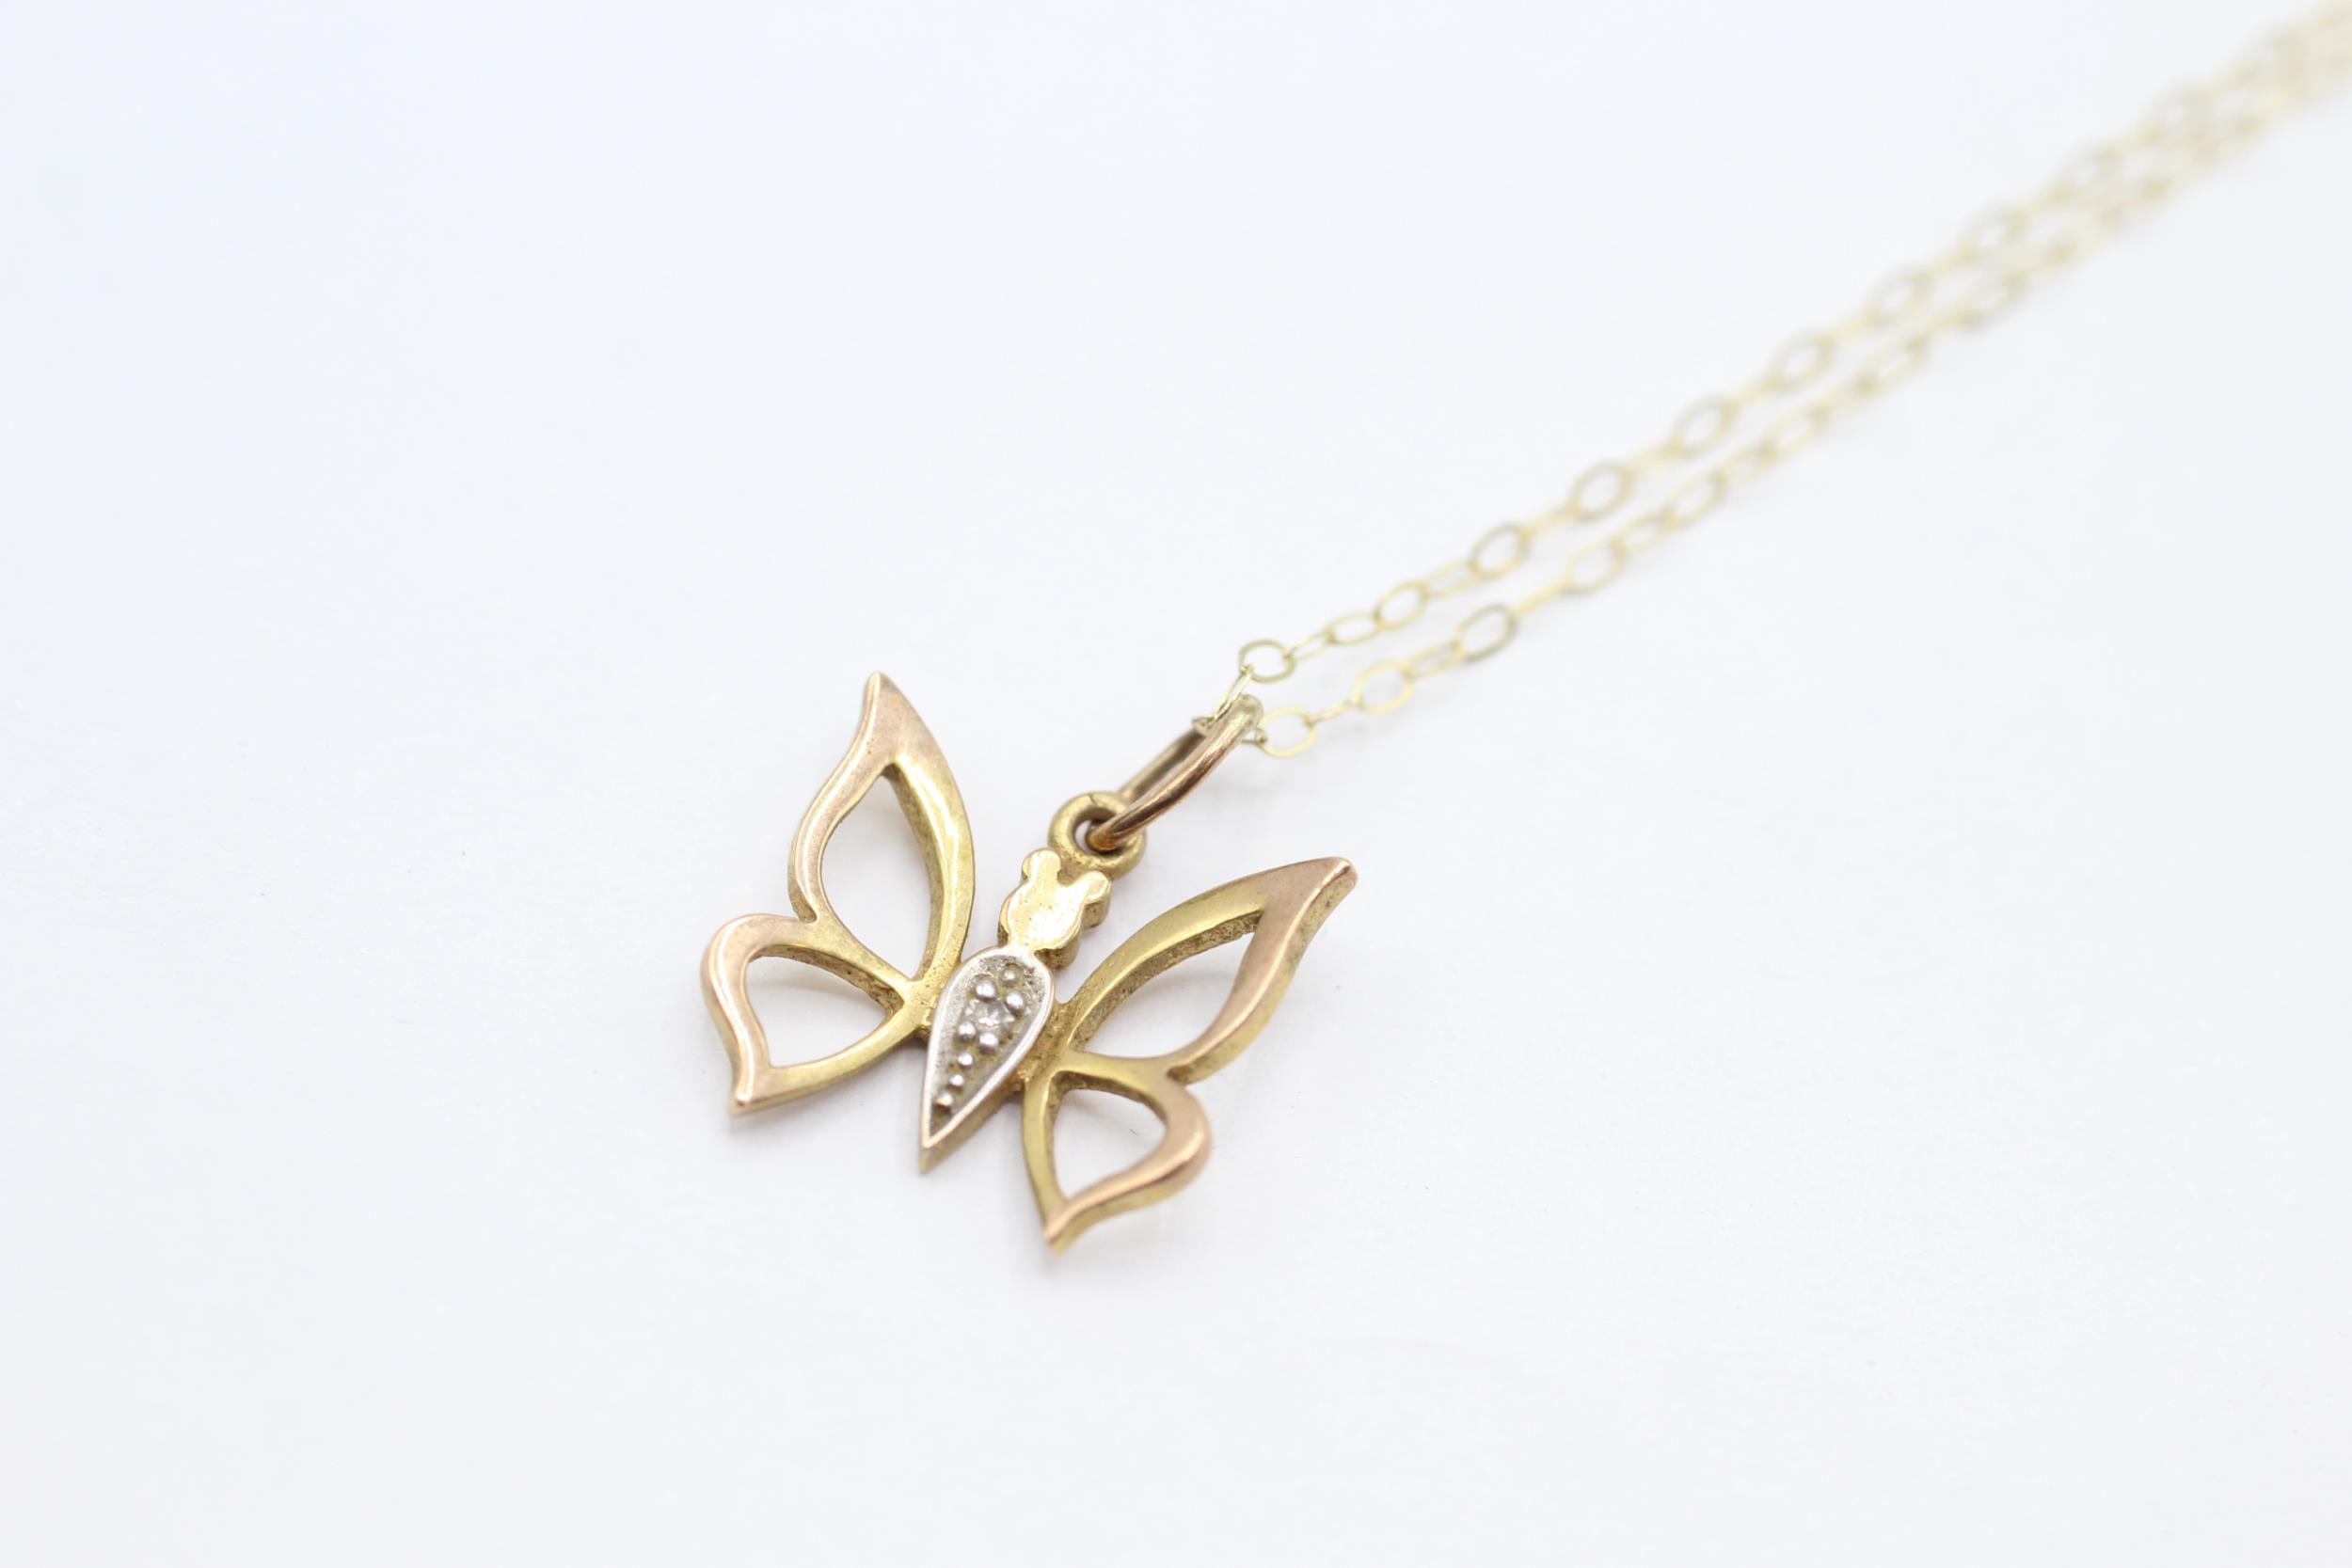 9ct gold diamond set butterfly pendant necklace - 1.1 g